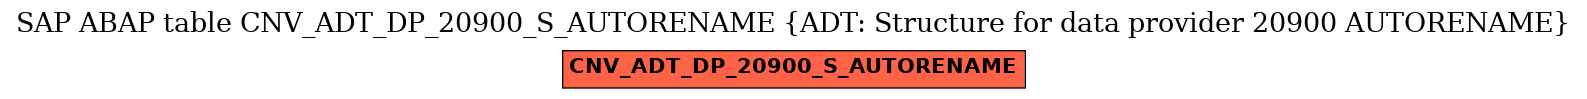 E-R Diagram for table CNV_ADT_DP_20900_S_AUTORENAME (ADT: Structure for data provider 20900 AUTORENAME)